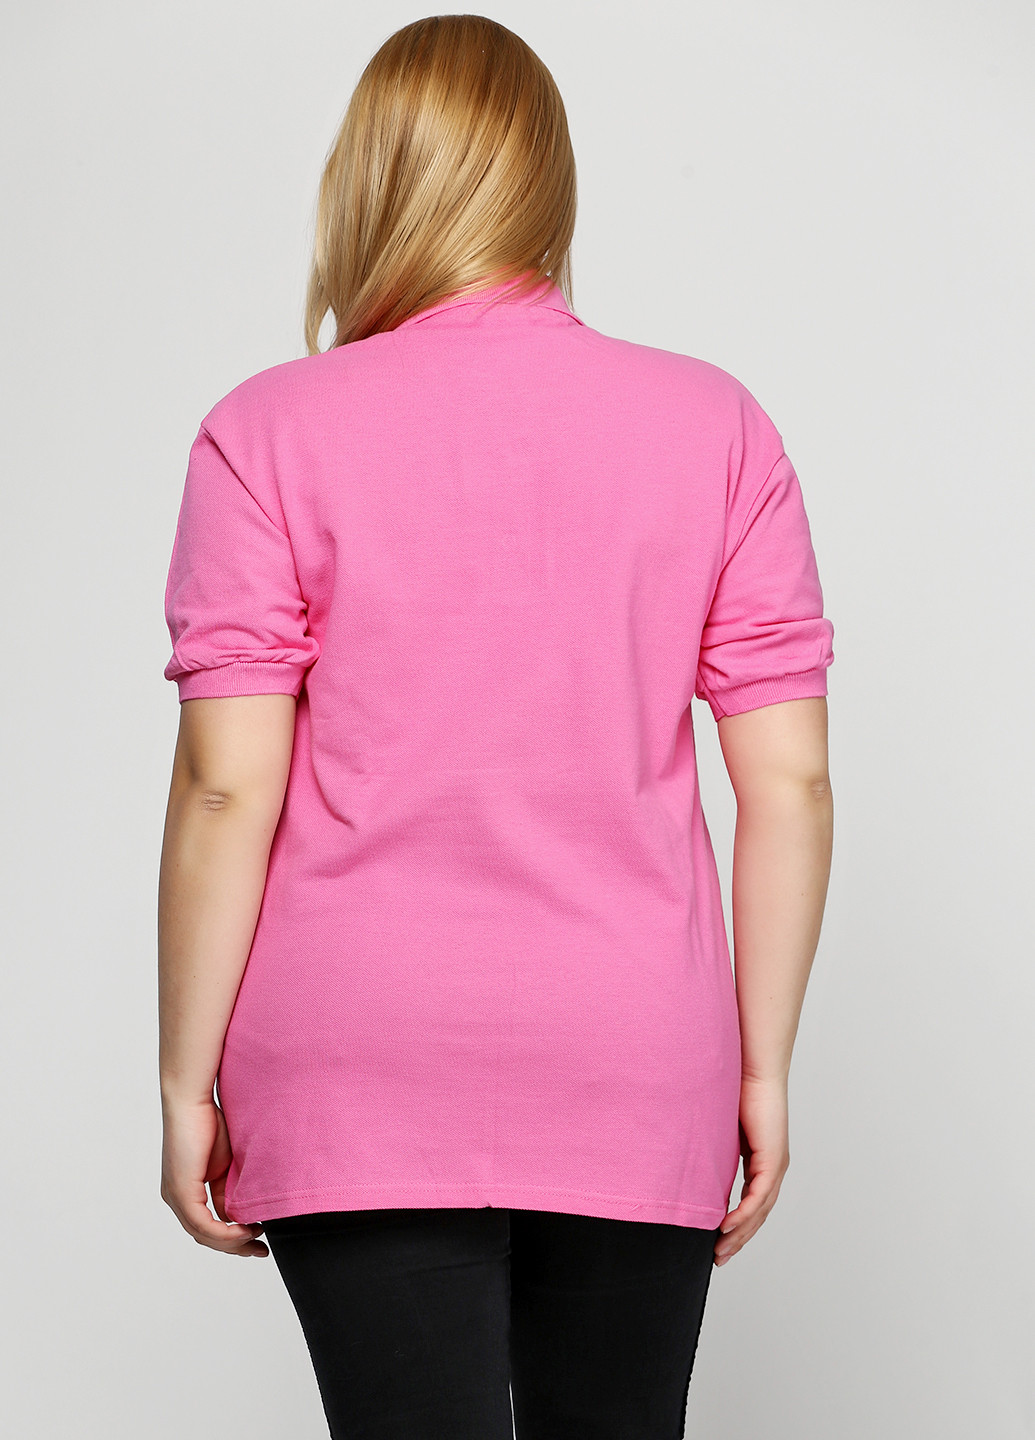 Розовая женская футболка-поло Cotton DeLuxe